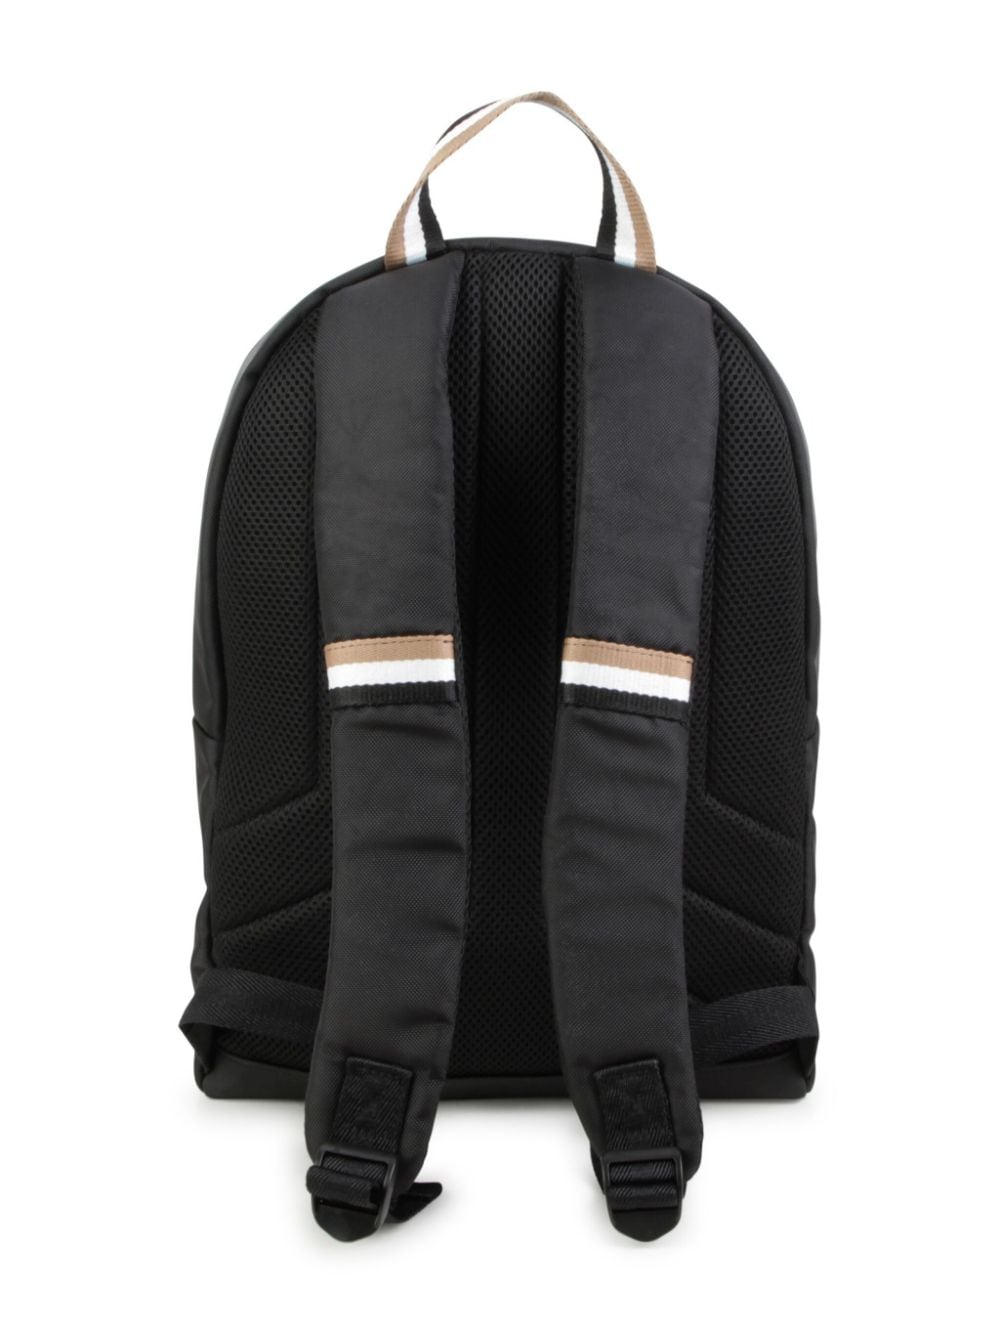 Black backpack for children with logo